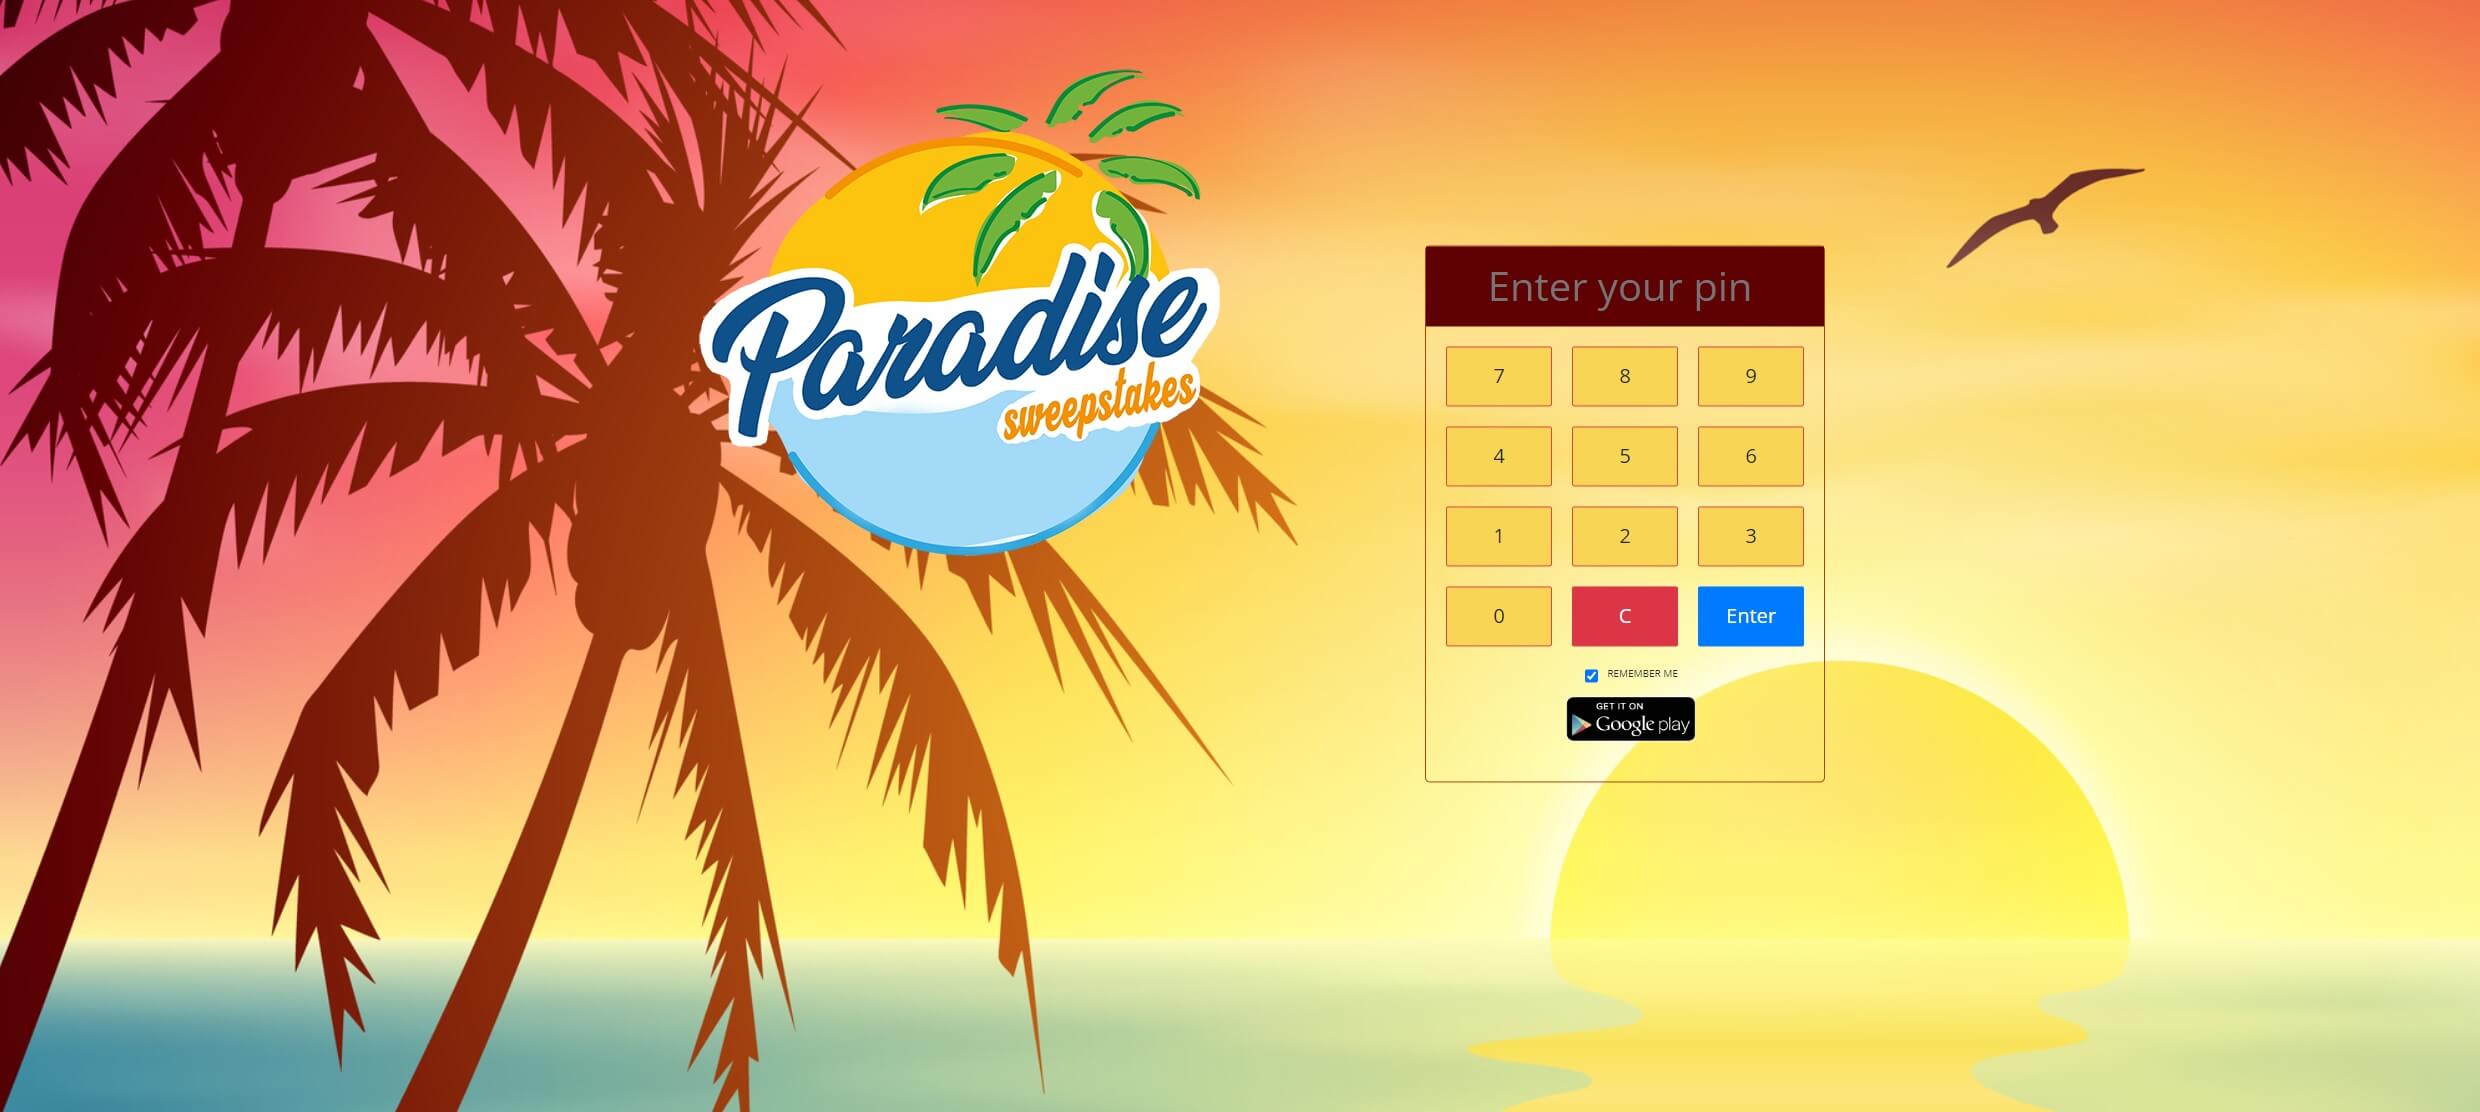 Paradise Sweepstakes Homepage